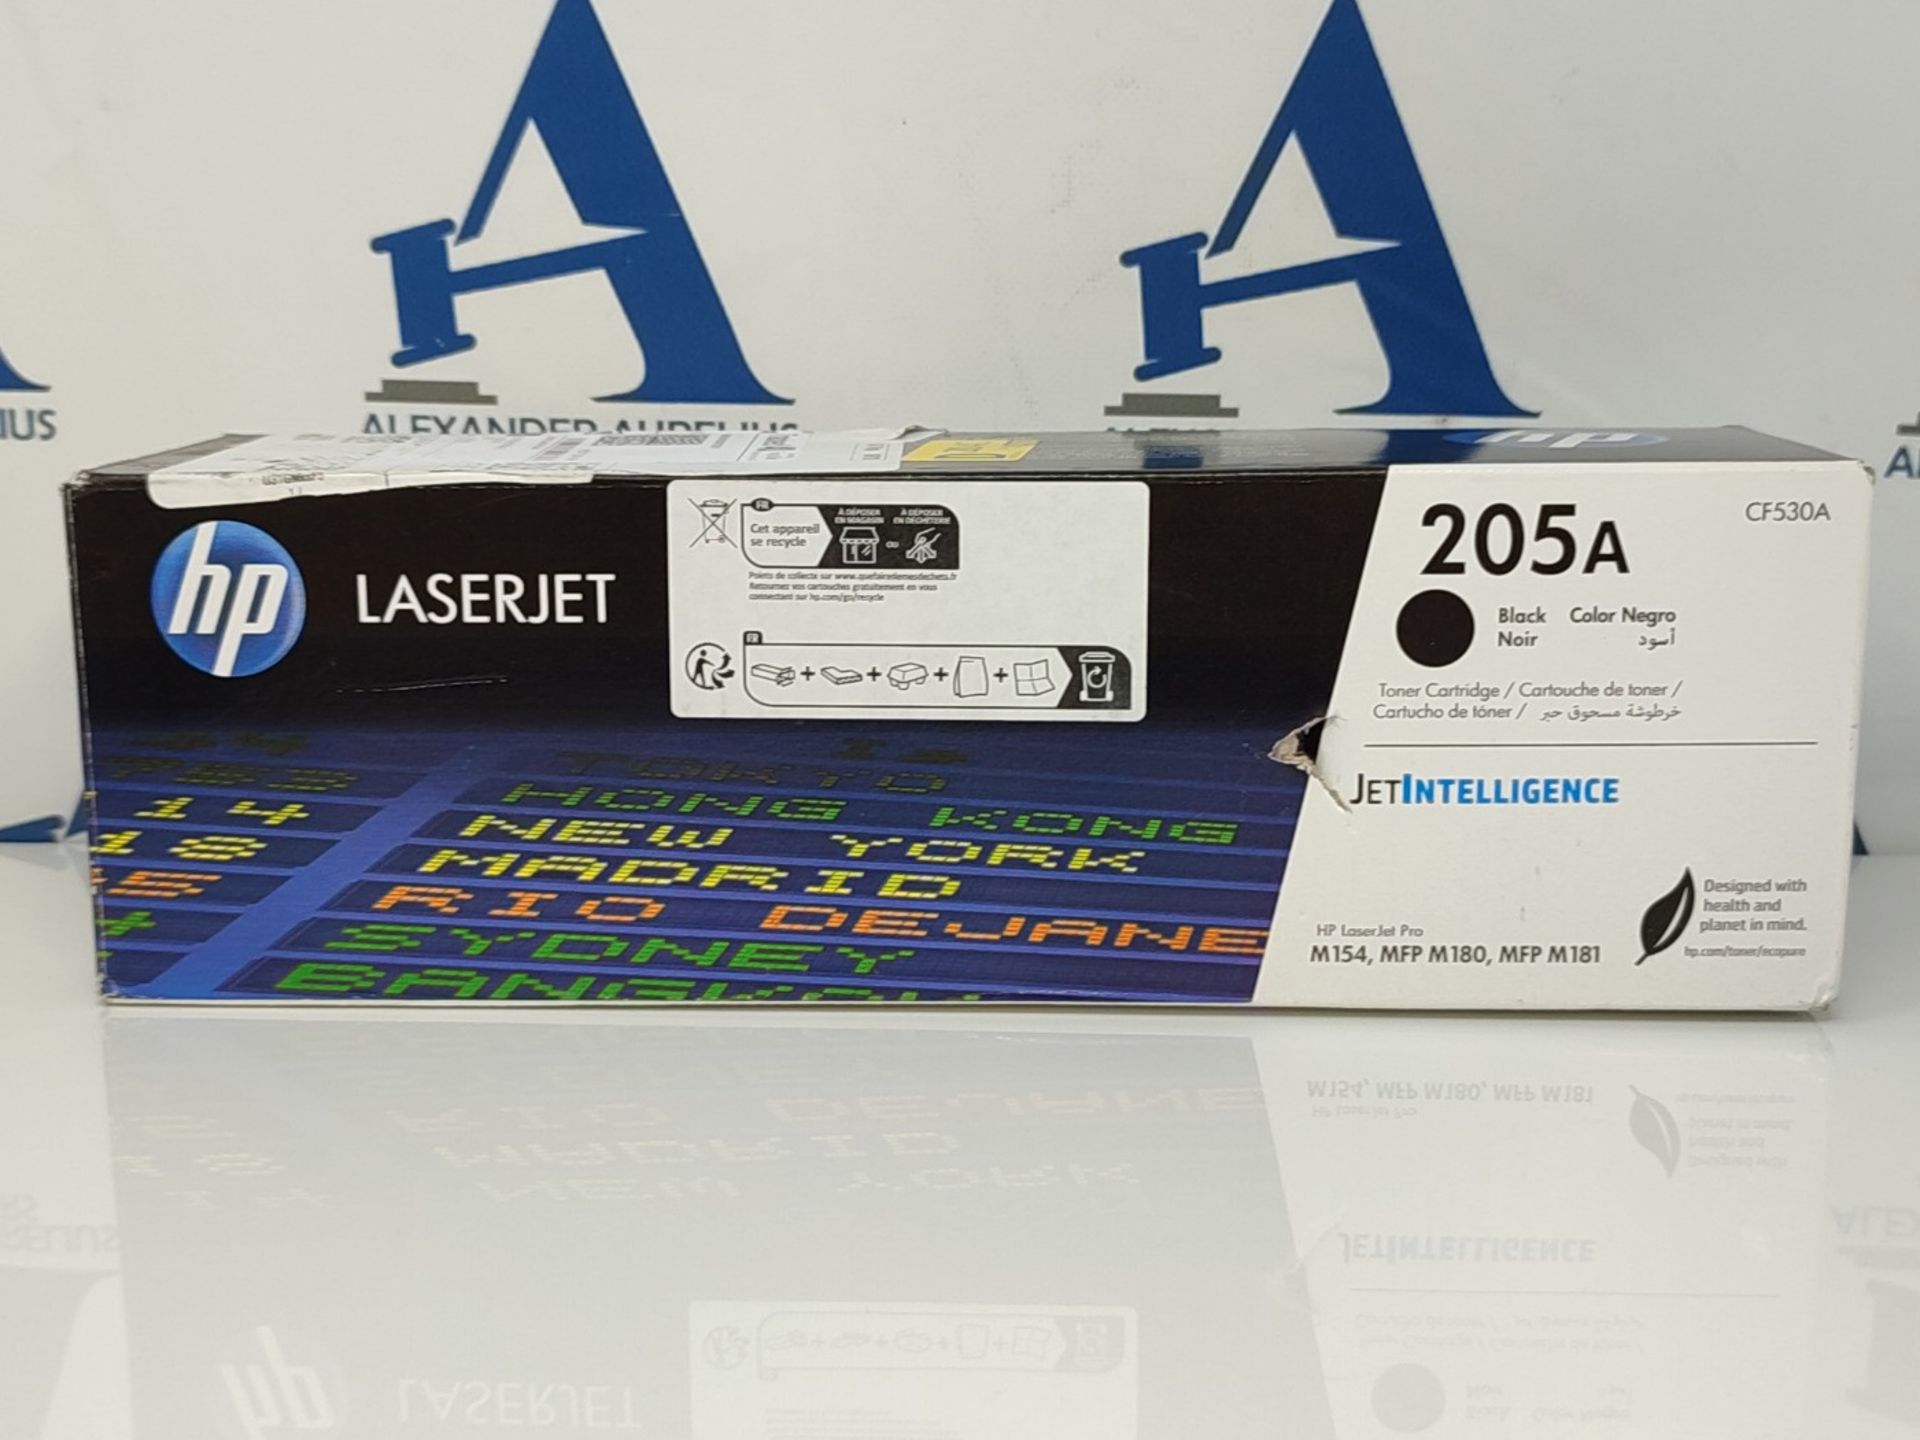 HP CF530A 205A LaserJet Toner Cartridge, Black, Single Pack - Image 2 of 3